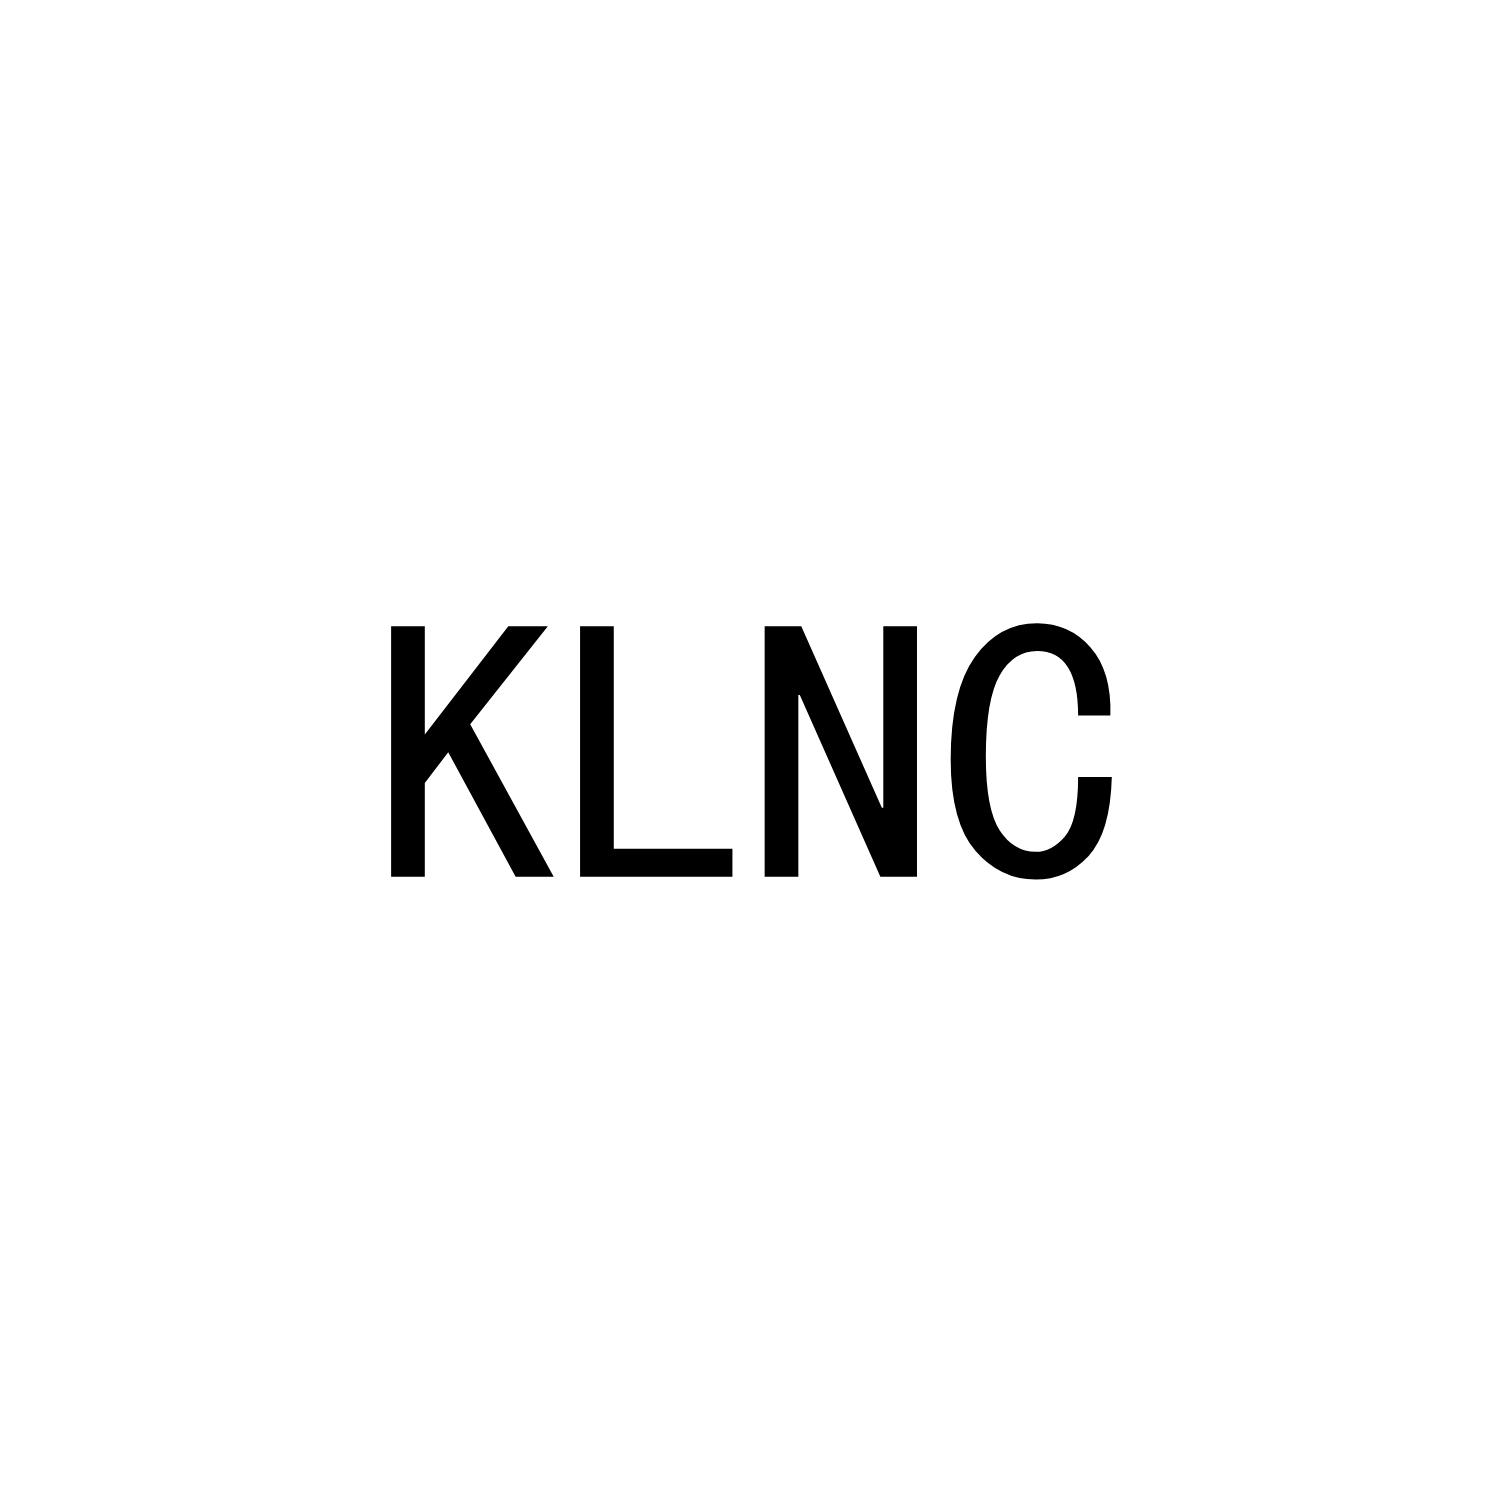 KLNC